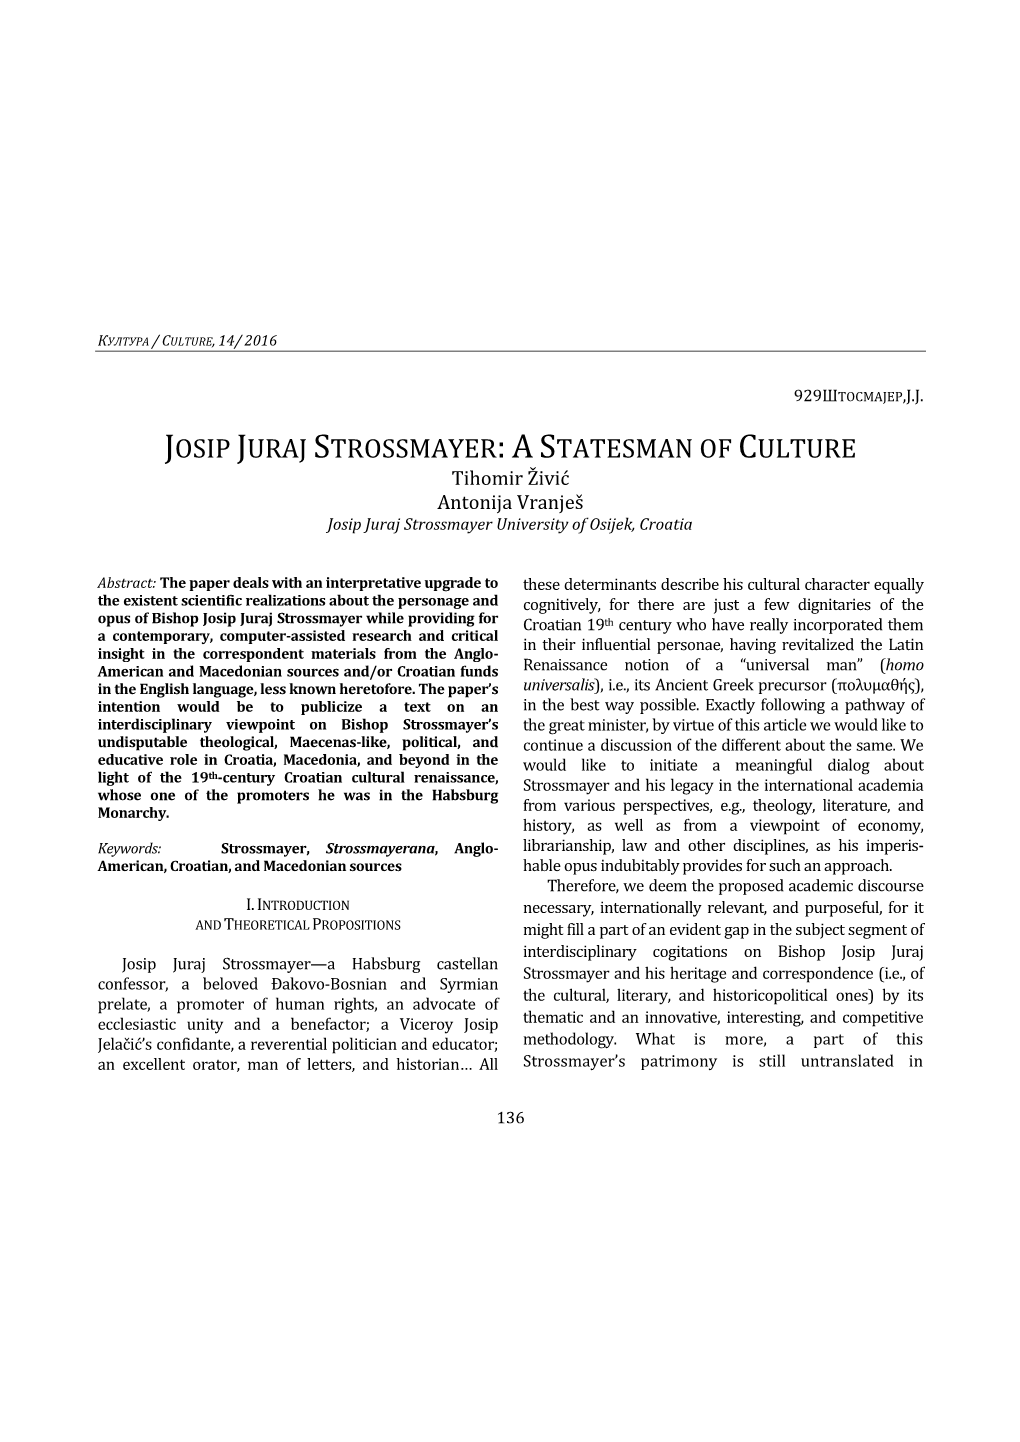 Josip Juraj Strossmayer:As Tatesman of Culture